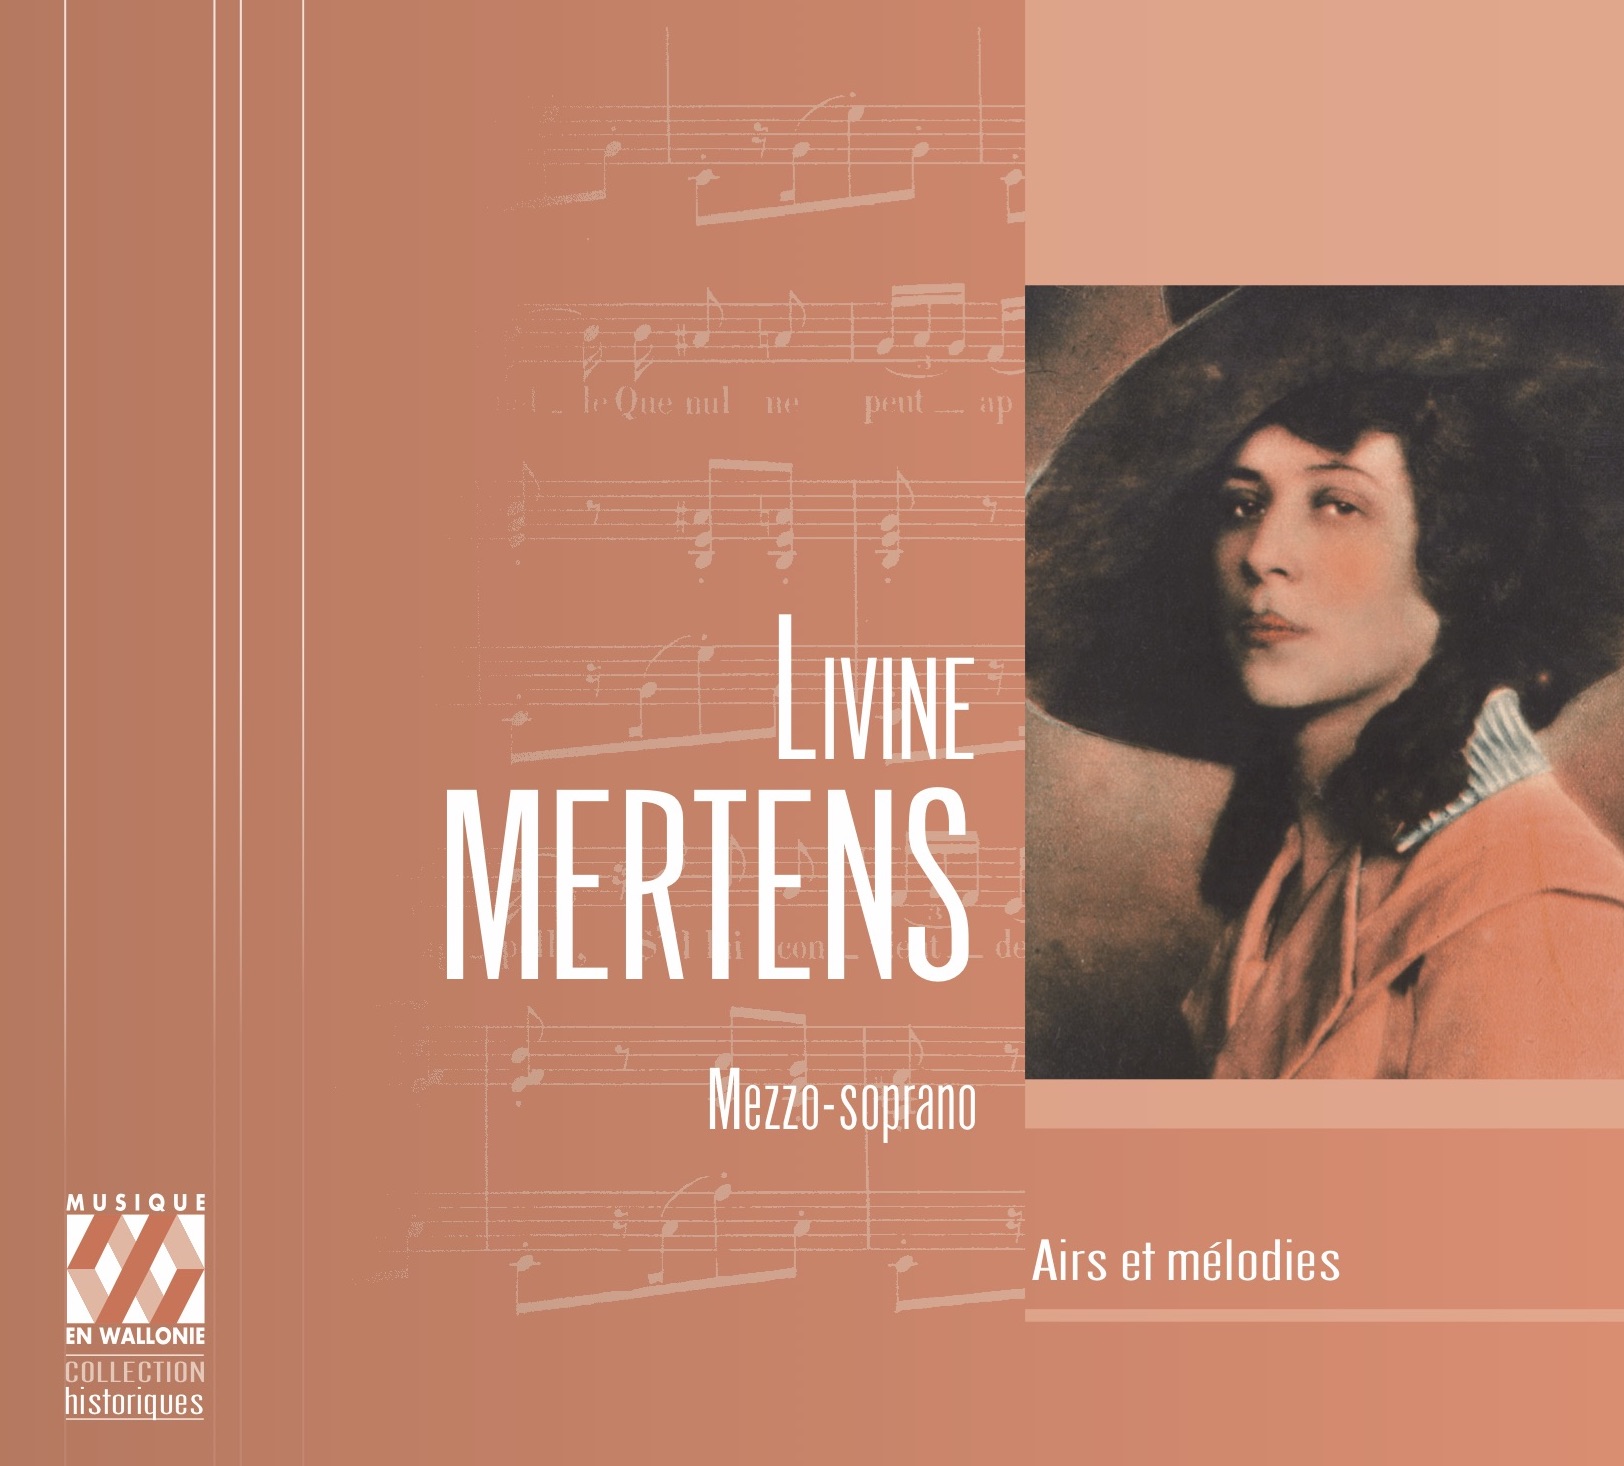 Livine Mertens (mezzo-soprano), Airs et mélodies